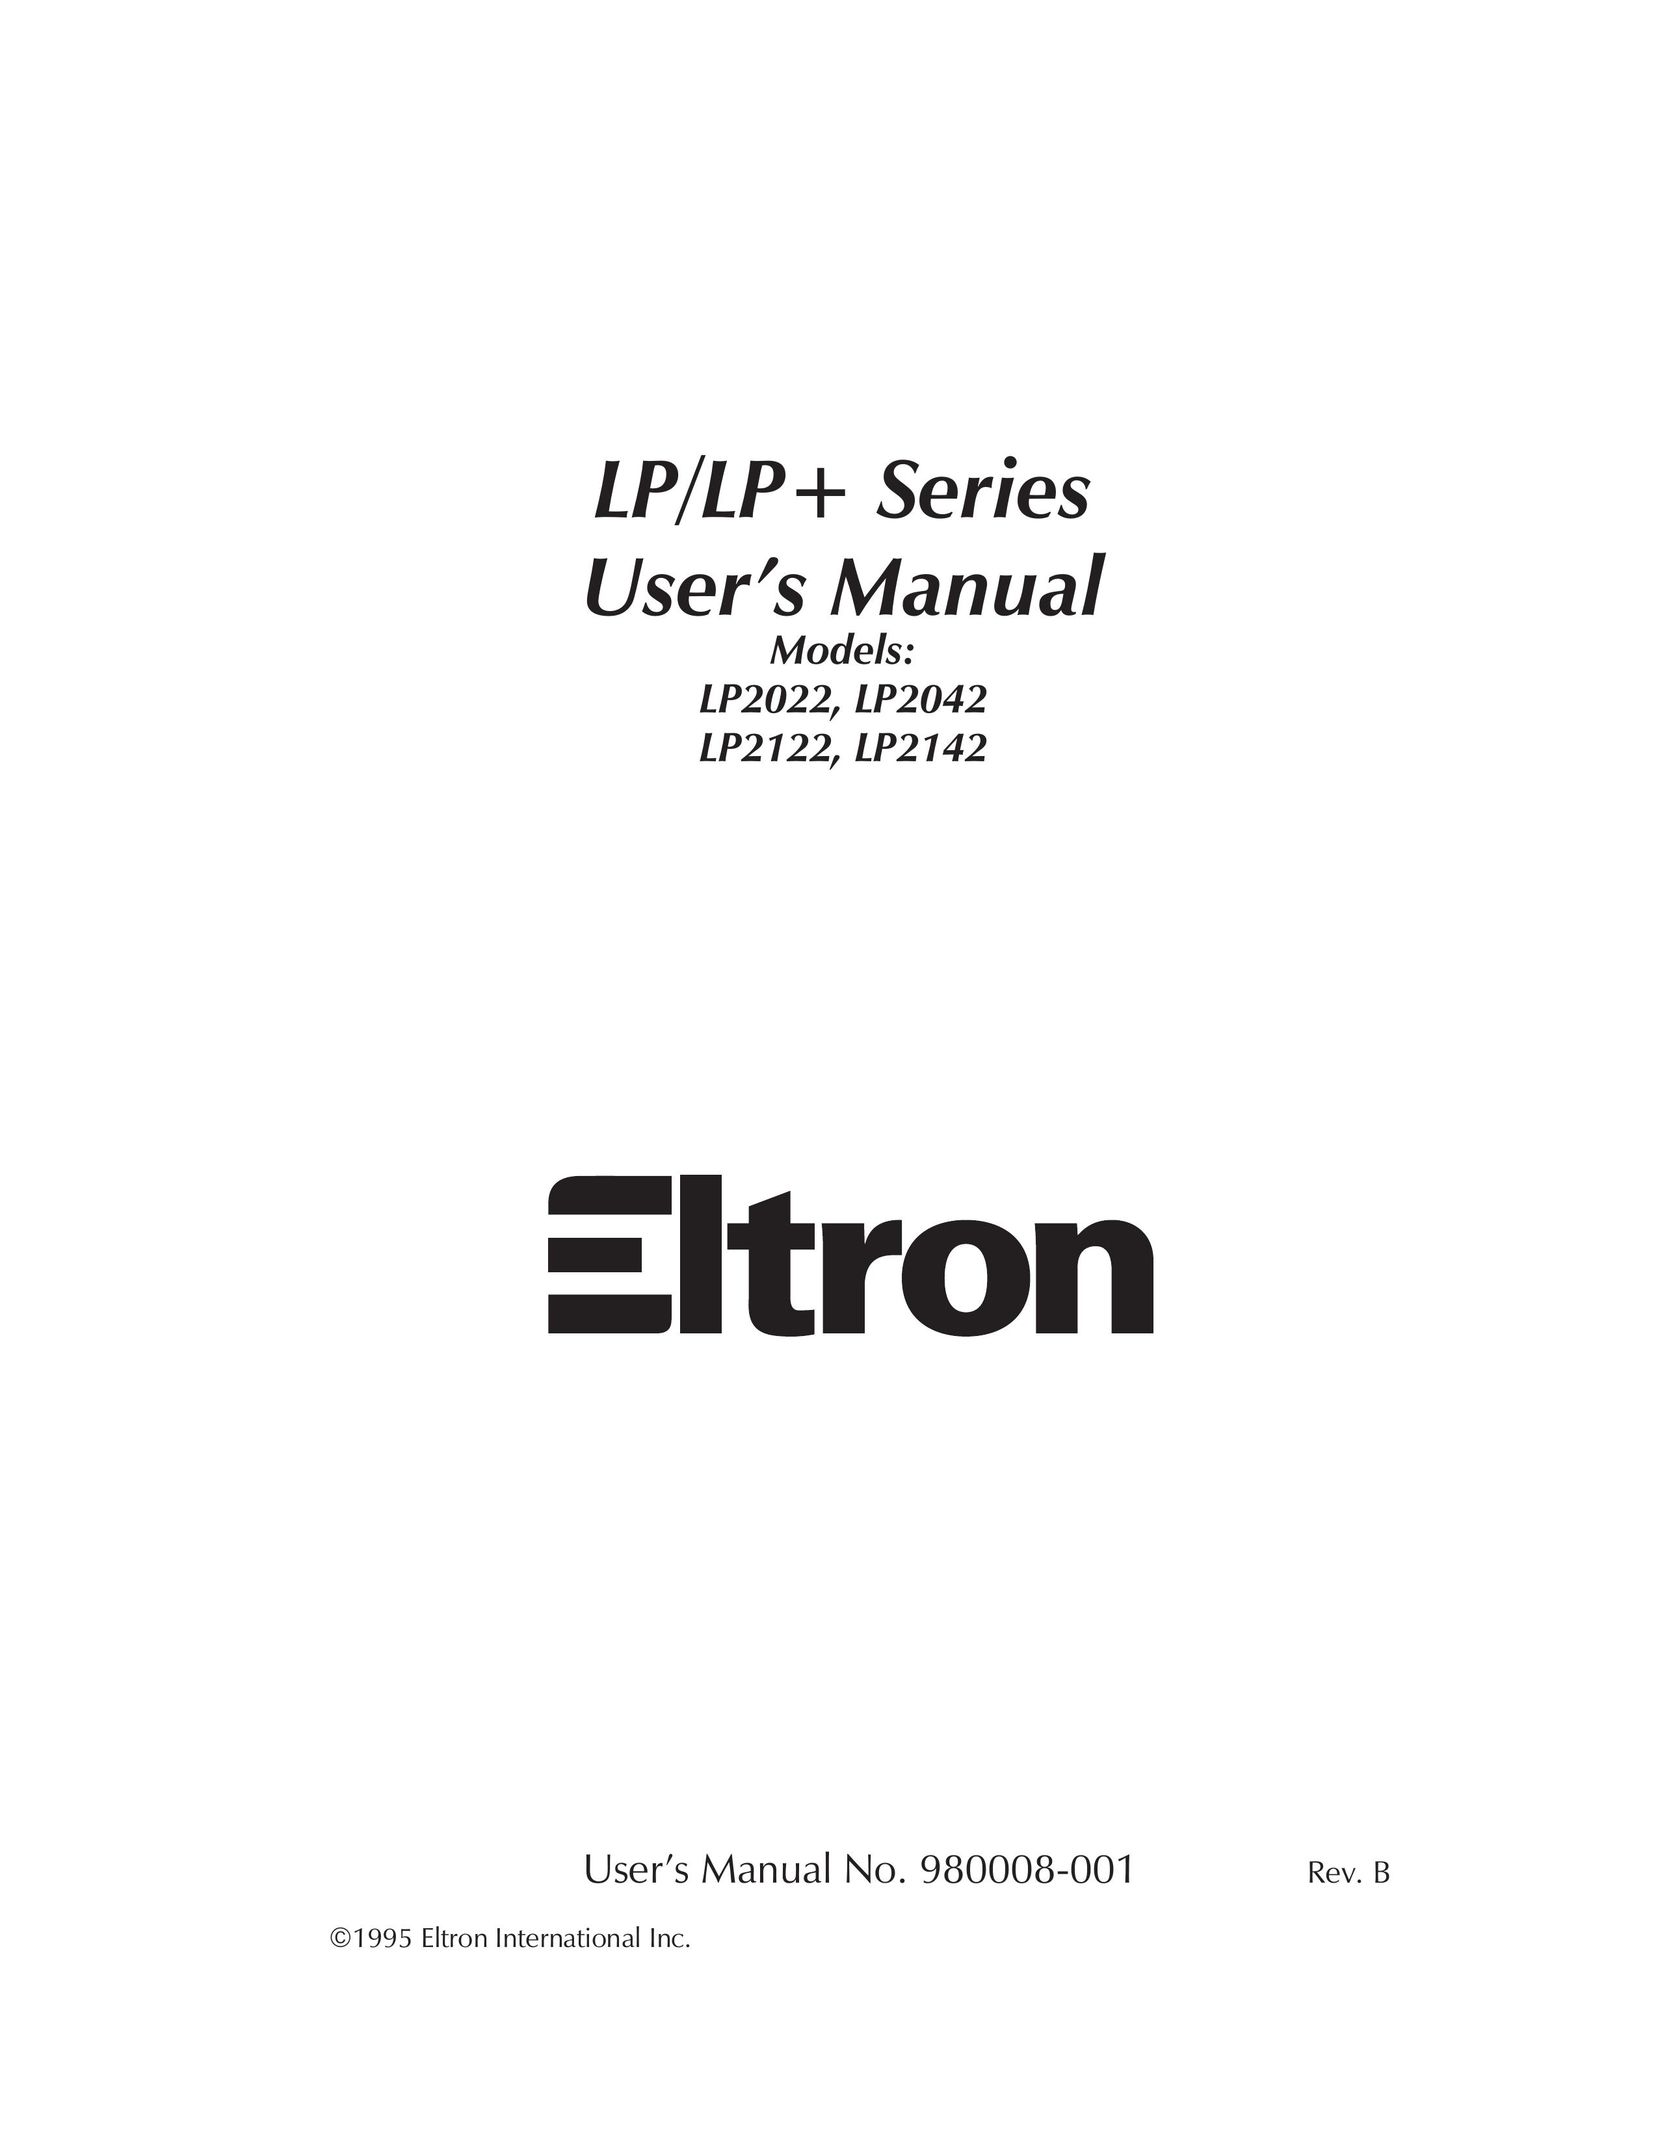 The Eltron Company LP2142 Printer User Manual